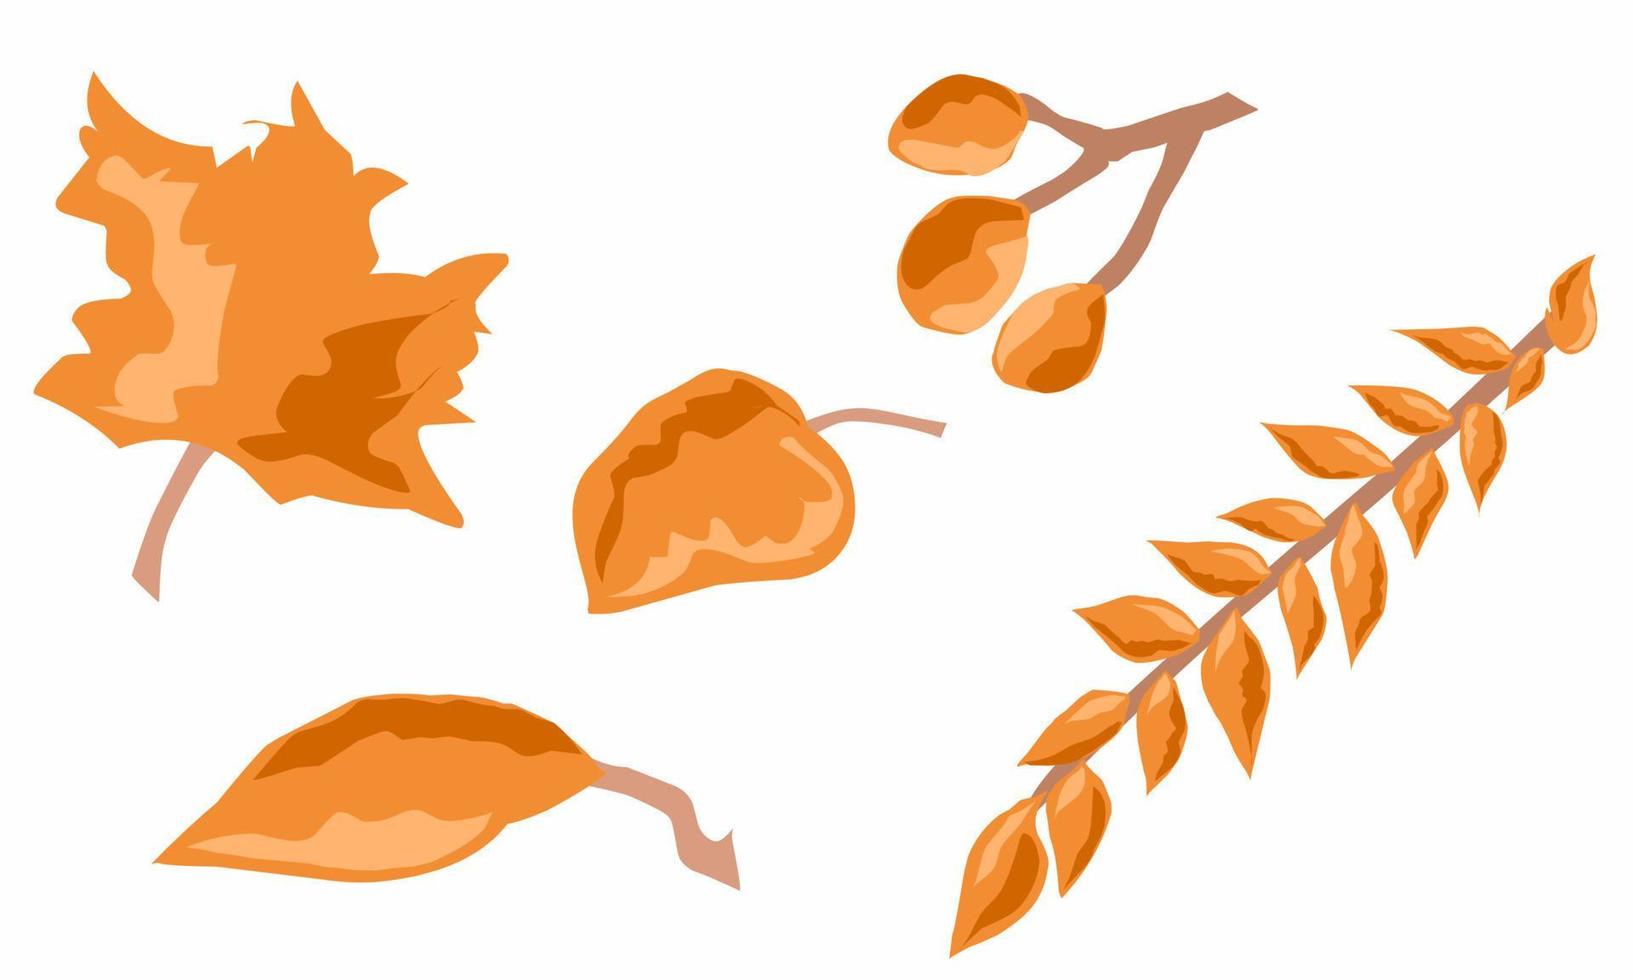 eben legen Vektor Illustration. schön trocken Blätter im Herbst